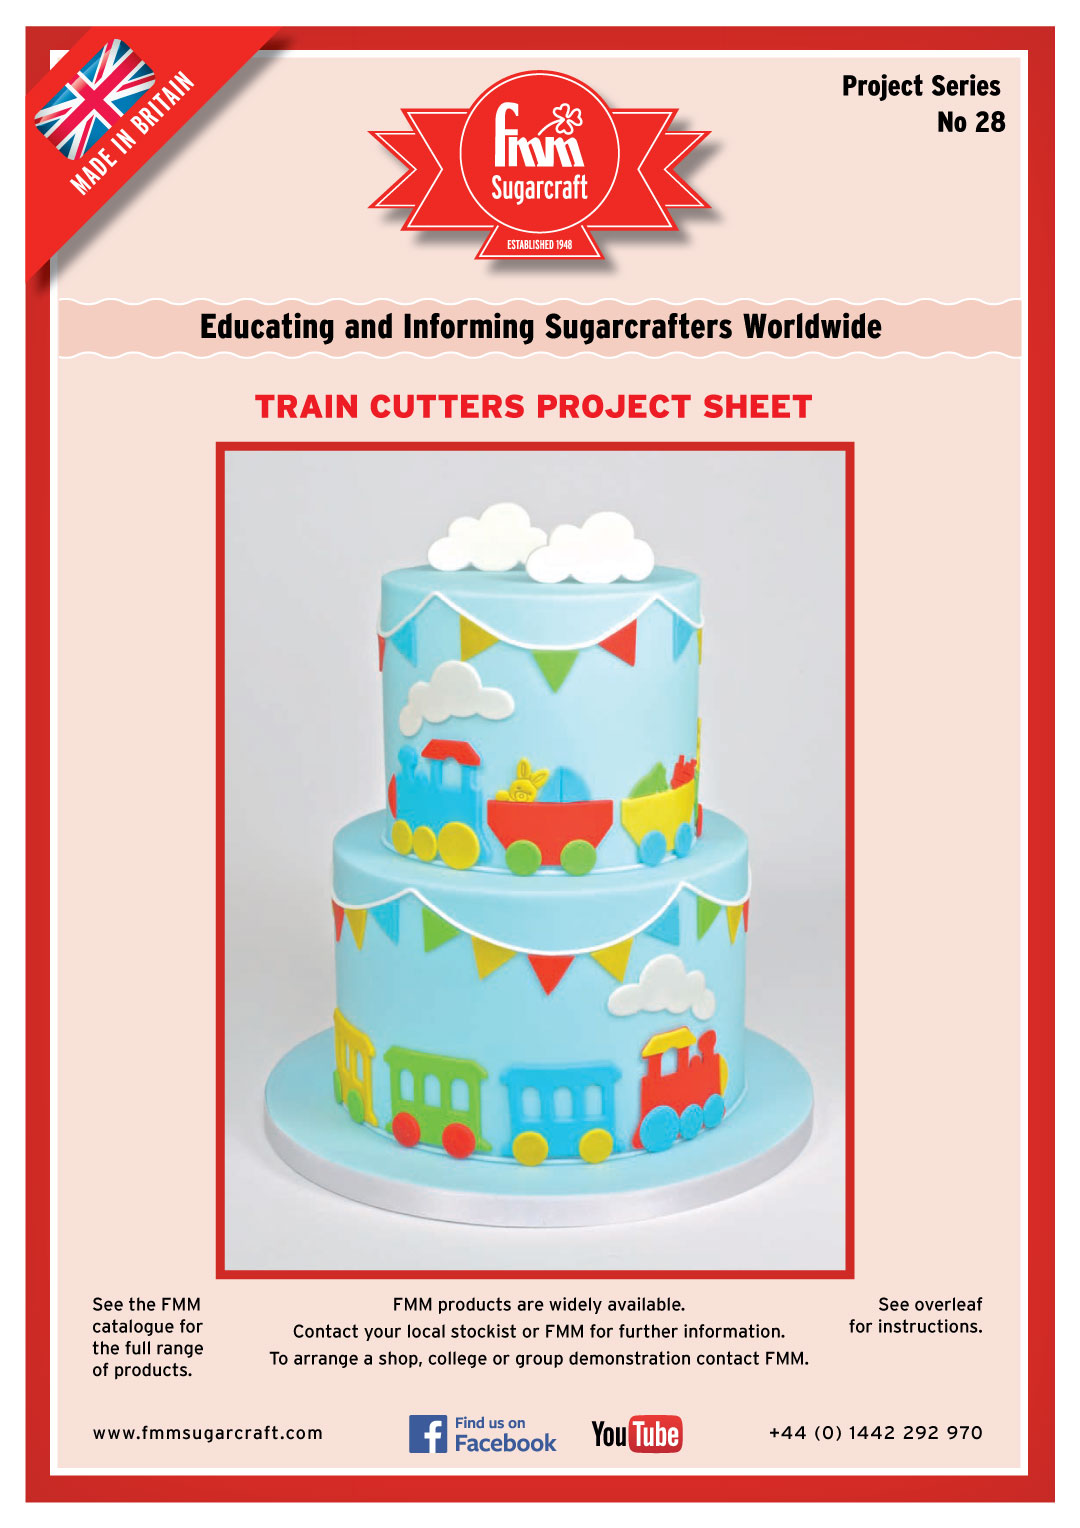 FMM Train Cutters Project Sheet